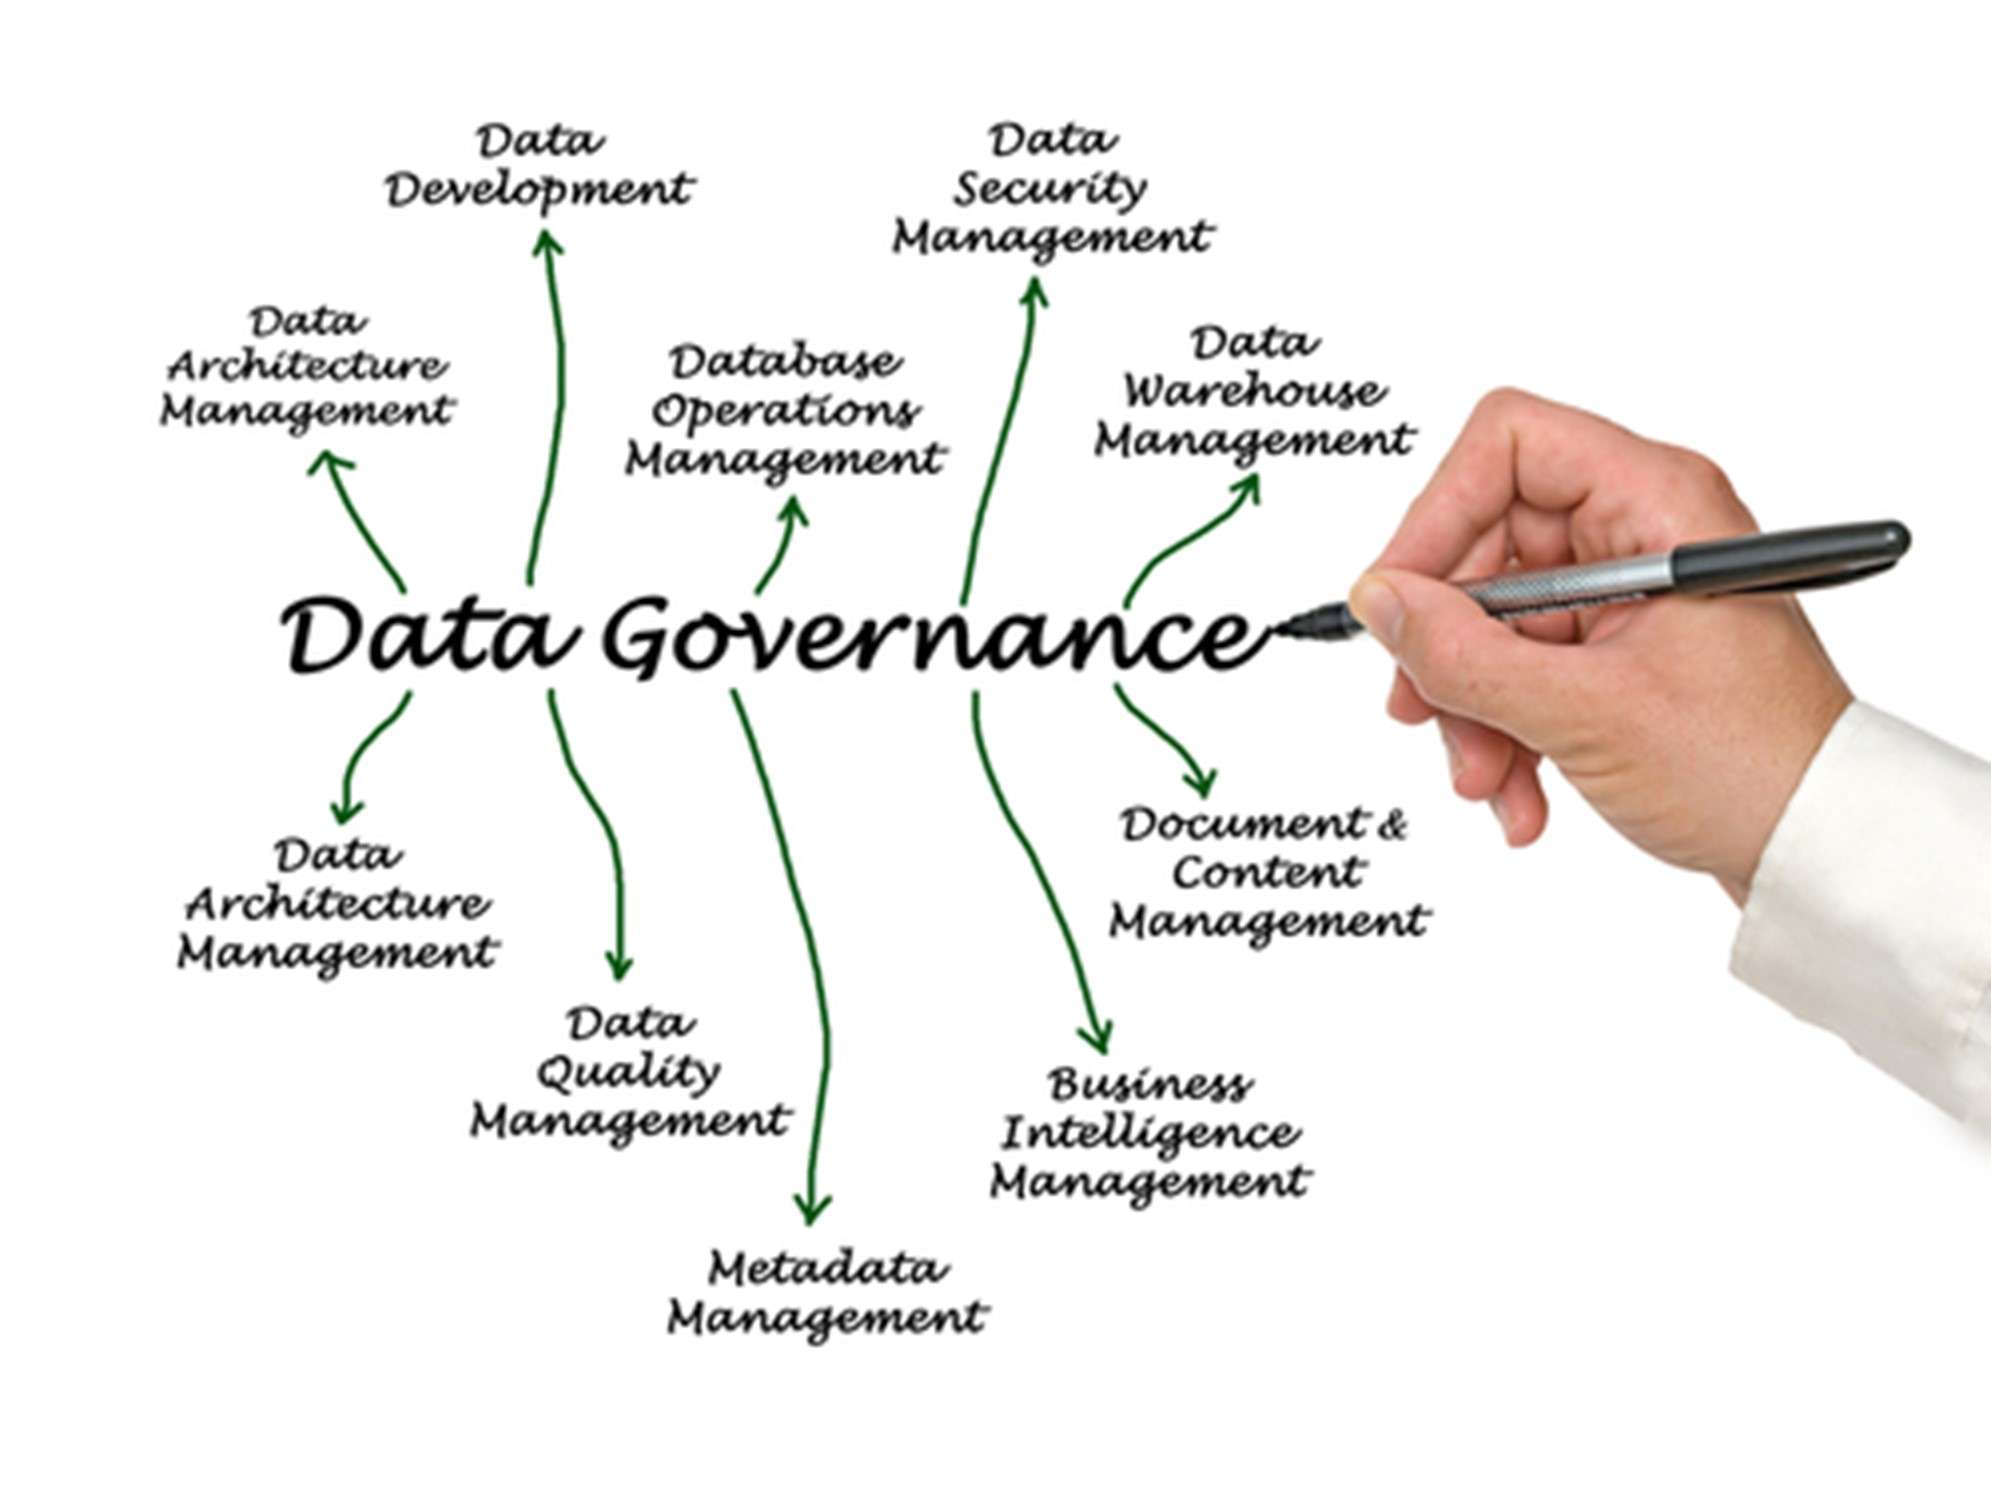 India’s position on Data governance